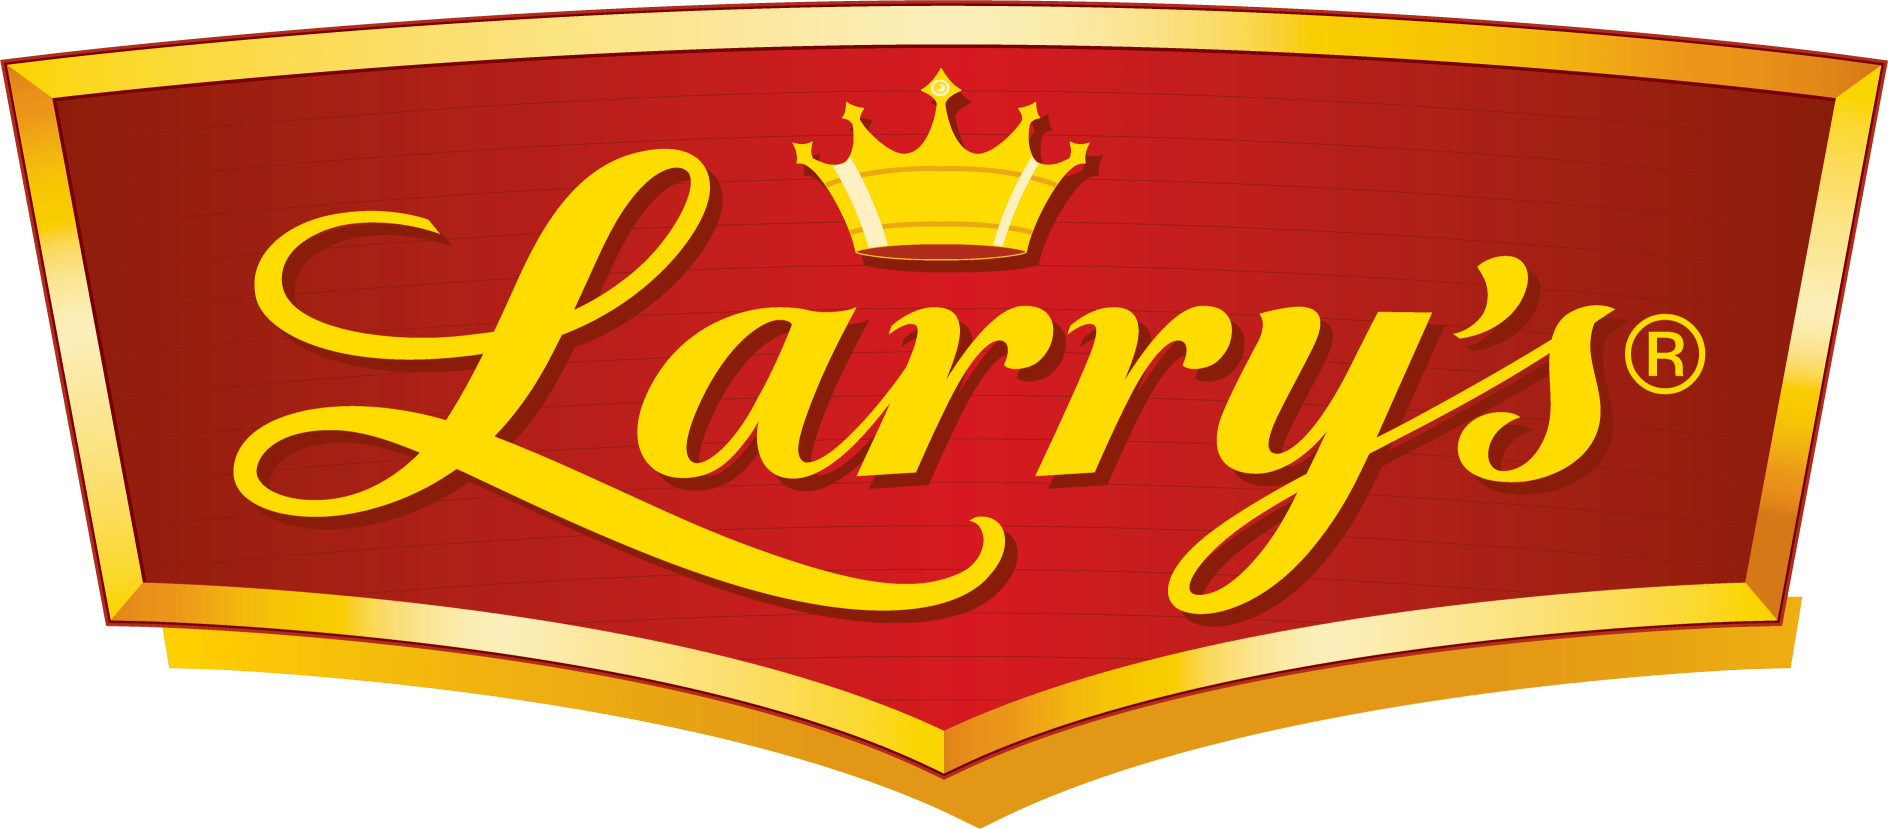 Larry Logo - Larry's | Logopedia | FANDOM powered by Wikia